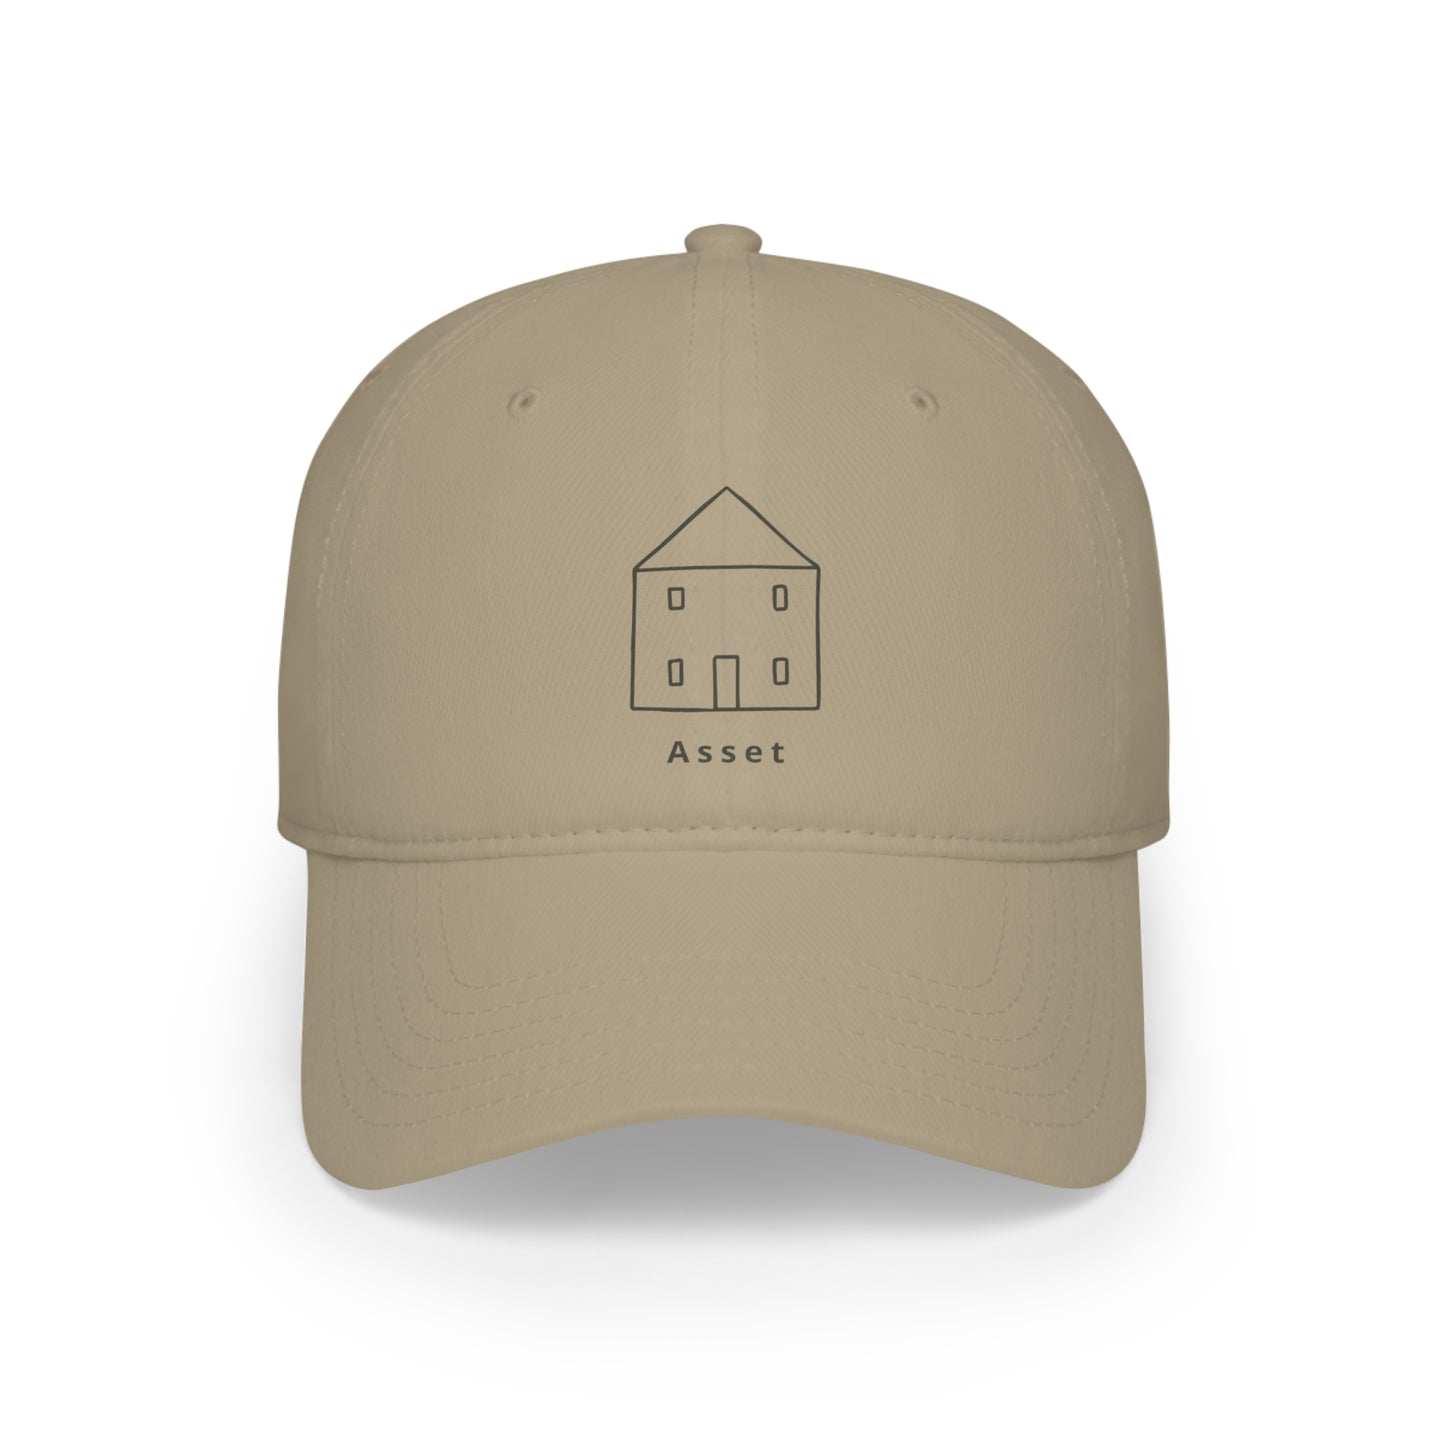 Home Asset Hat